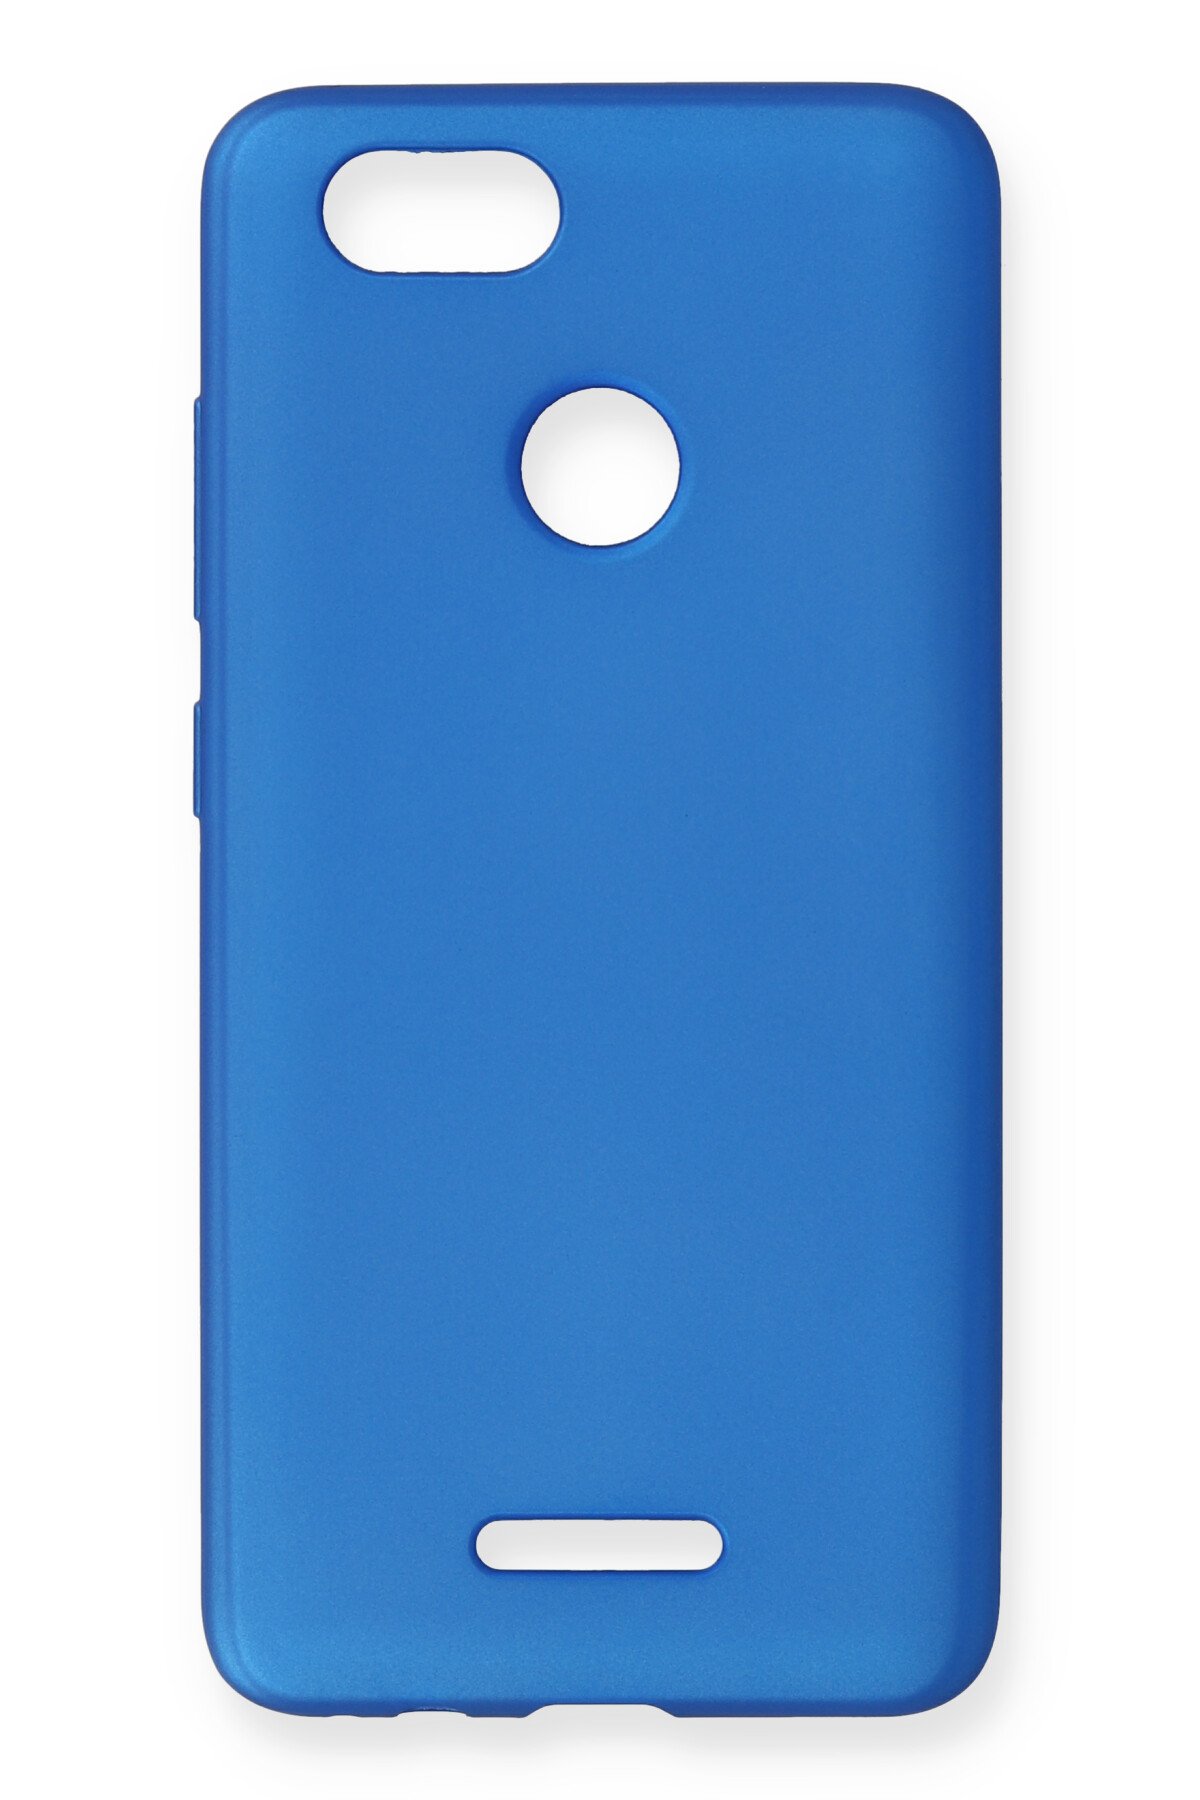 NewFace Newface Casper Via M4 Kılıf Premium Rubber Silikon - Mavi